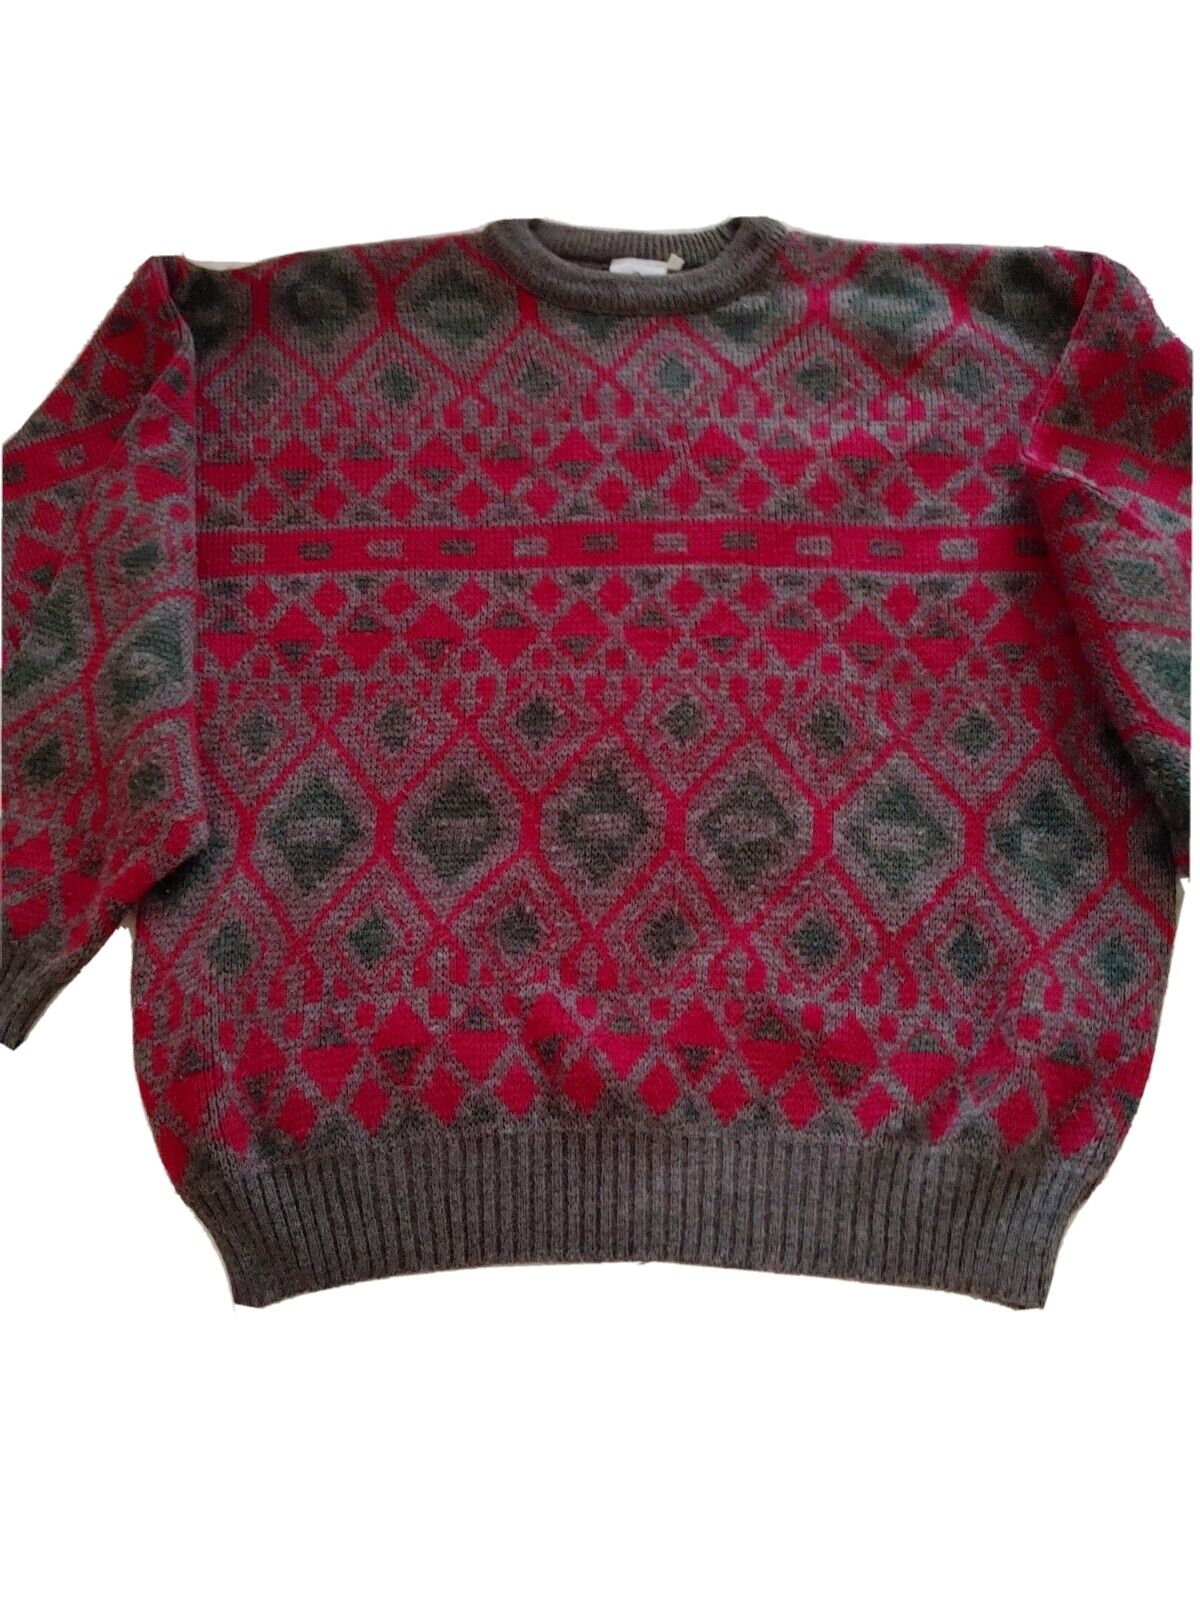 Vintage Woodman\'s Men\'s Sweater Wool Blend Crew Nordic made in England Large